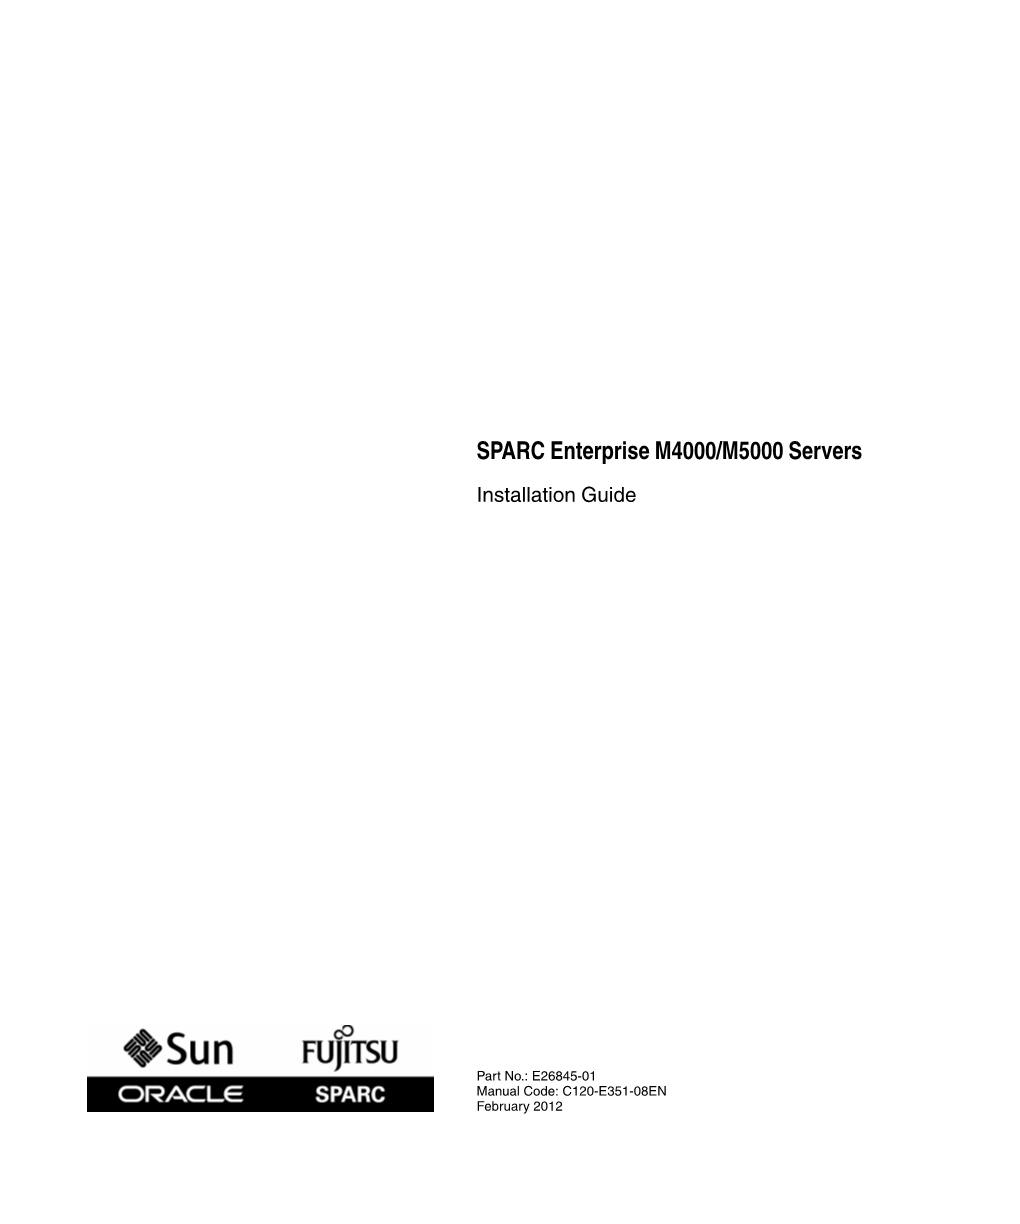 SPARC Enterprise M4000/M5000 Servers Installation Guide